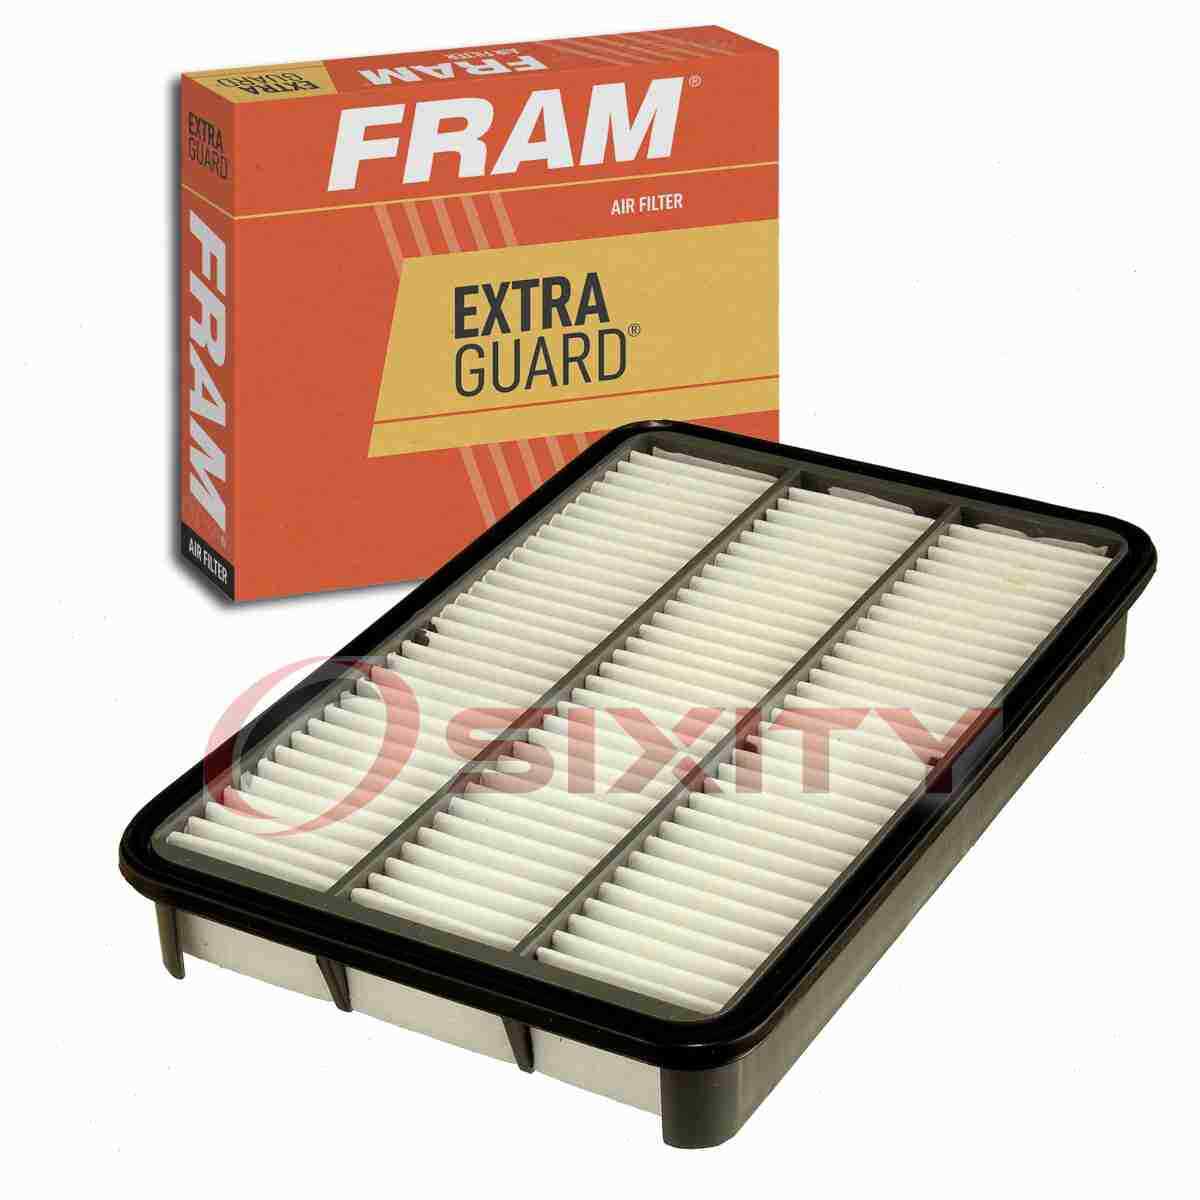 FRAM Extra Guard Air Filter for 1993-2004 Isuzu Rodeo Intake Inlet Manifold ra